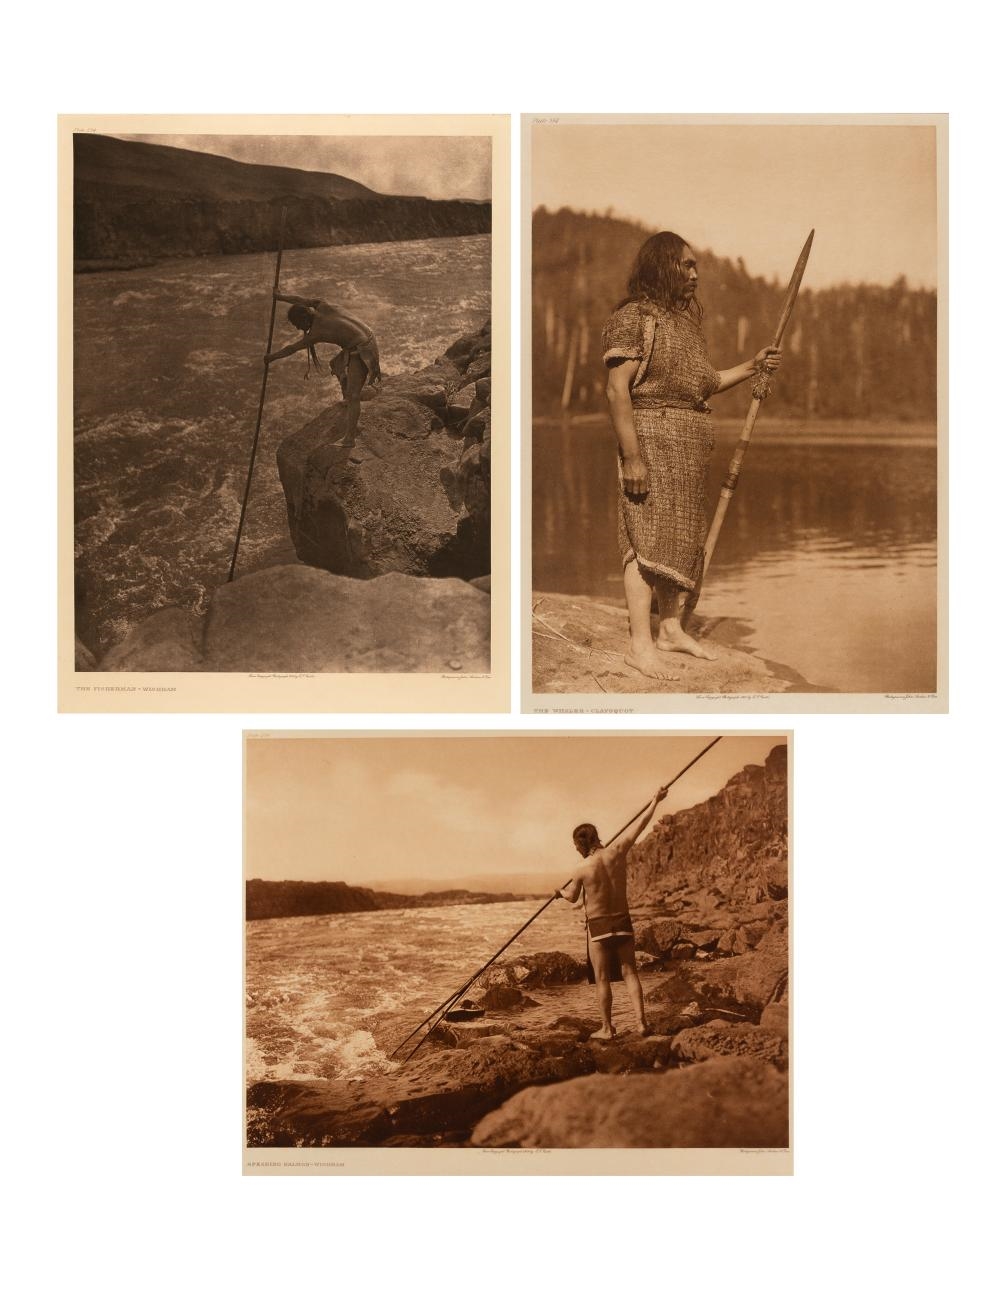 Group of Three Photogravures: The Whaler - Clayoquot, 1915 + Spearing Salmon - Wishham, 1909 + The Fisherman - Wishham, 1909 by Edward S. Curtis, 1915